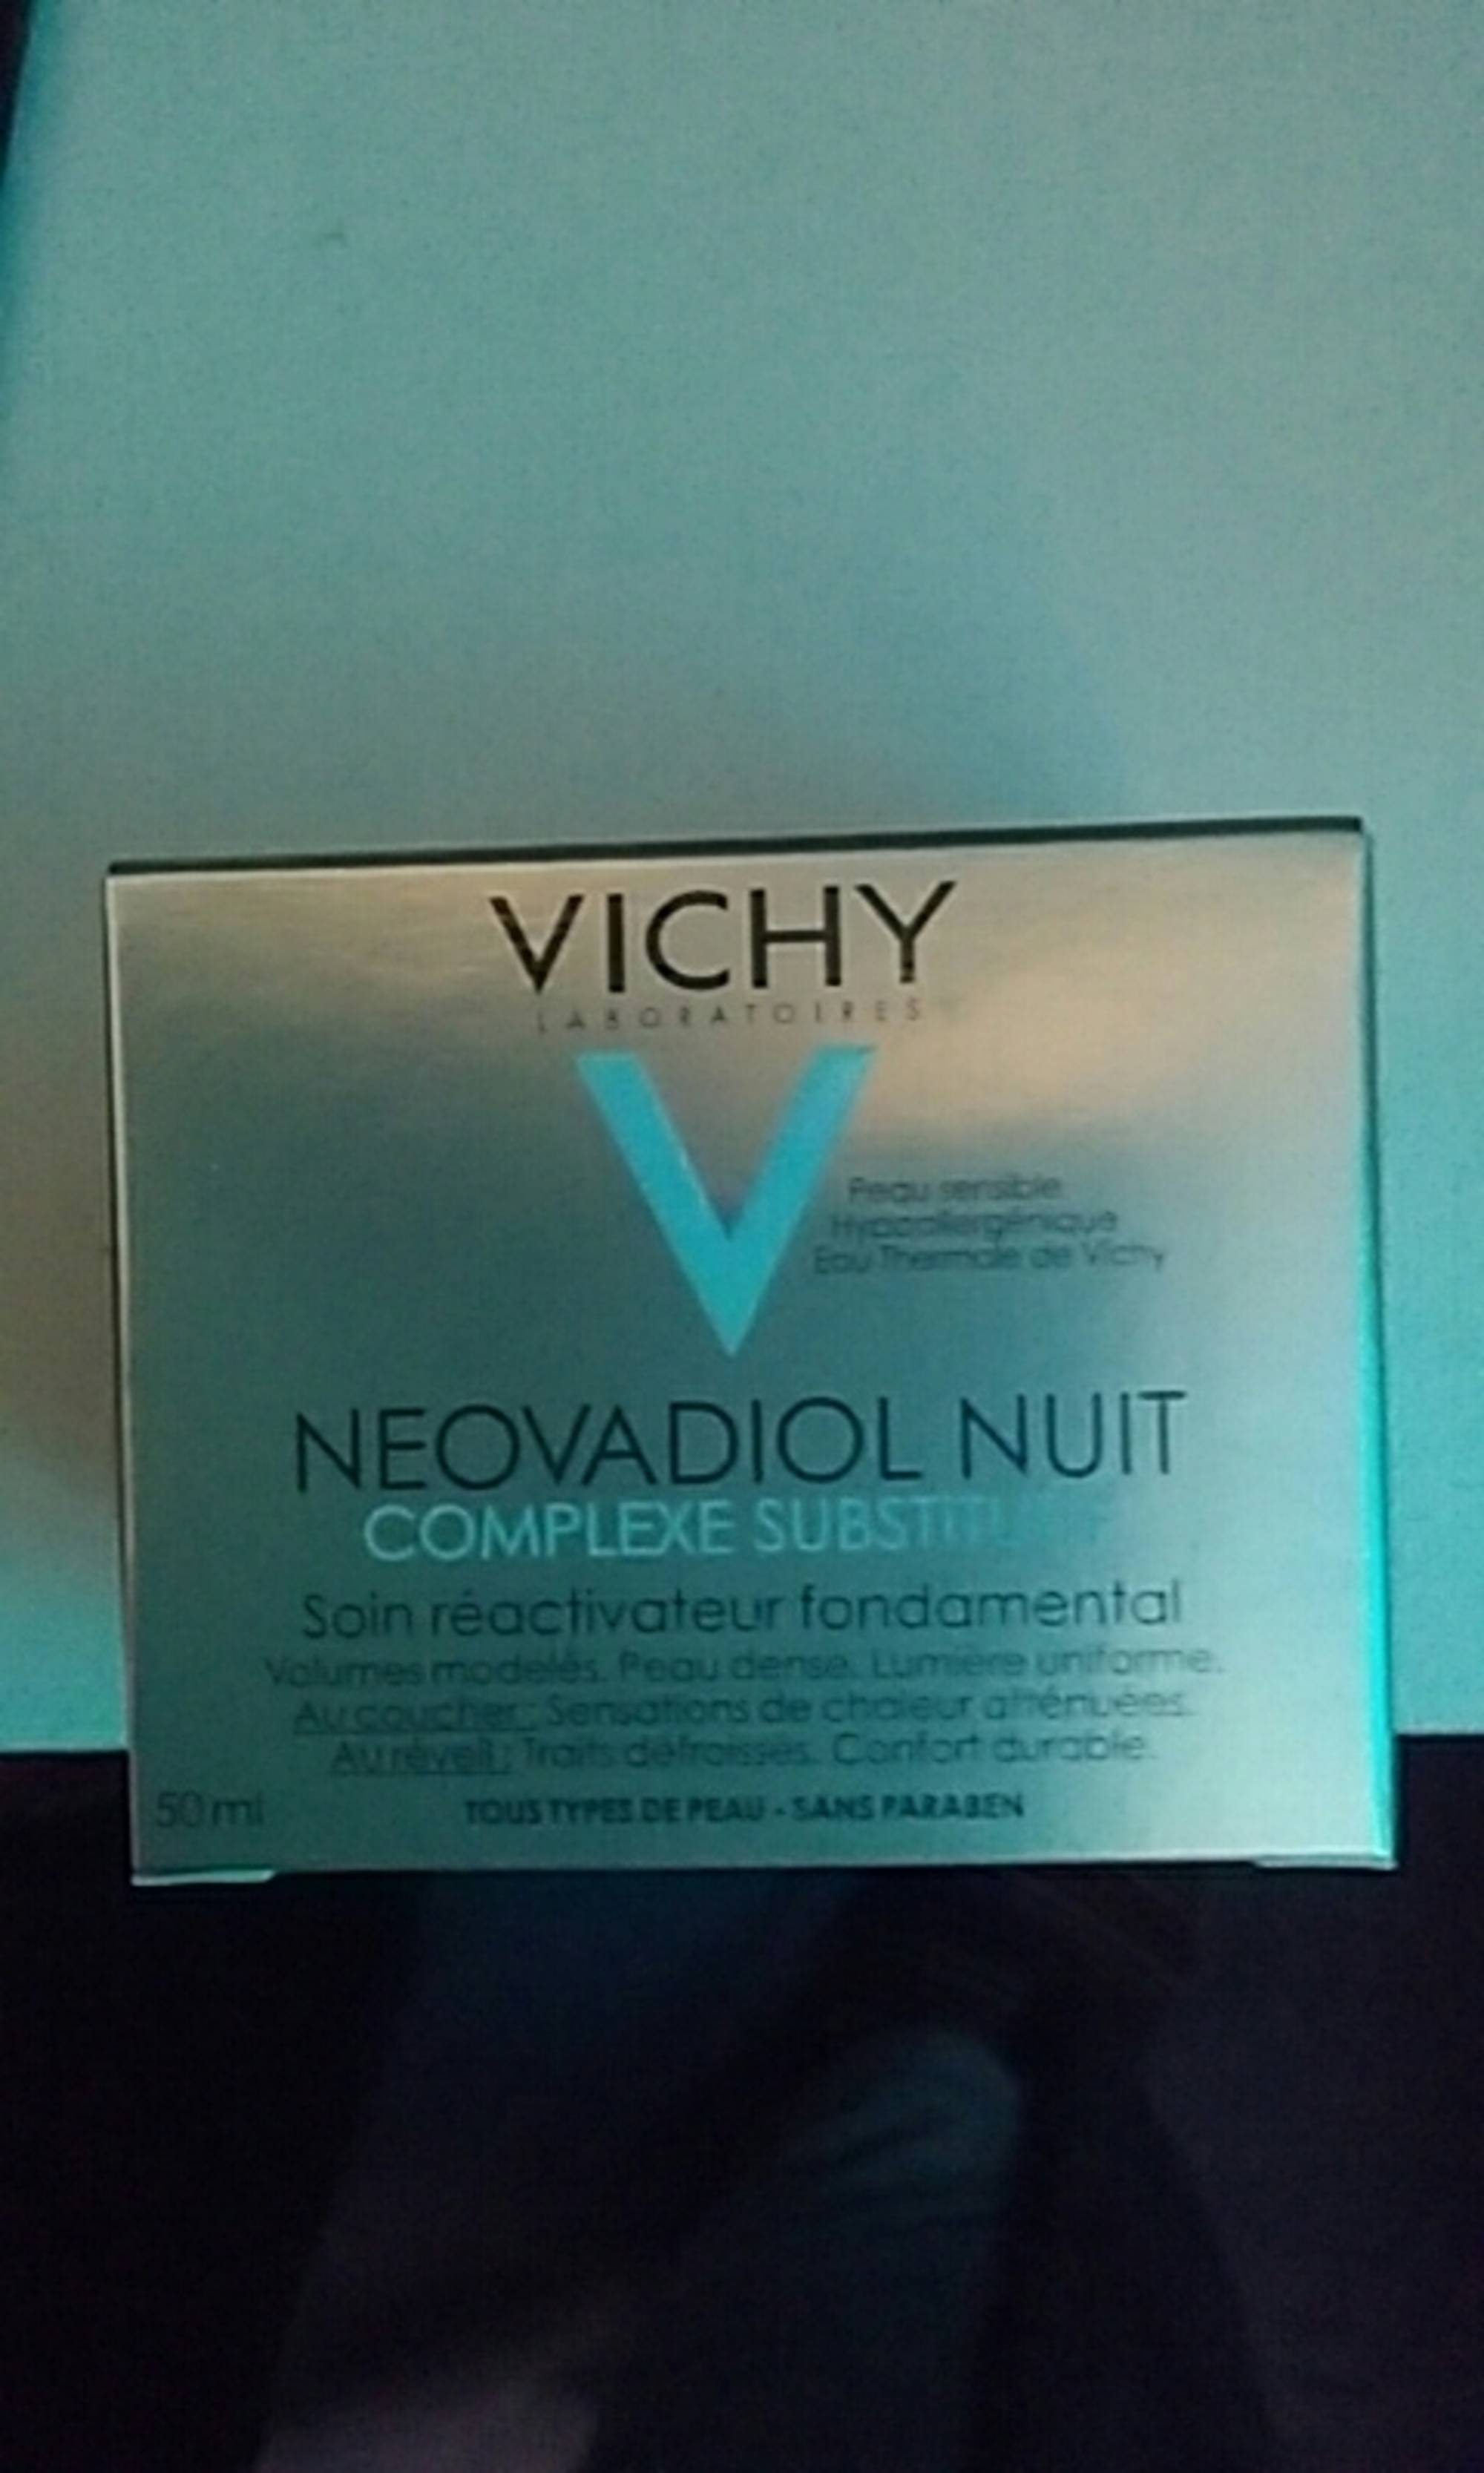 VICHY - Neovadiol nuit - Complexe substitutif Soin réactivateur fondamental 